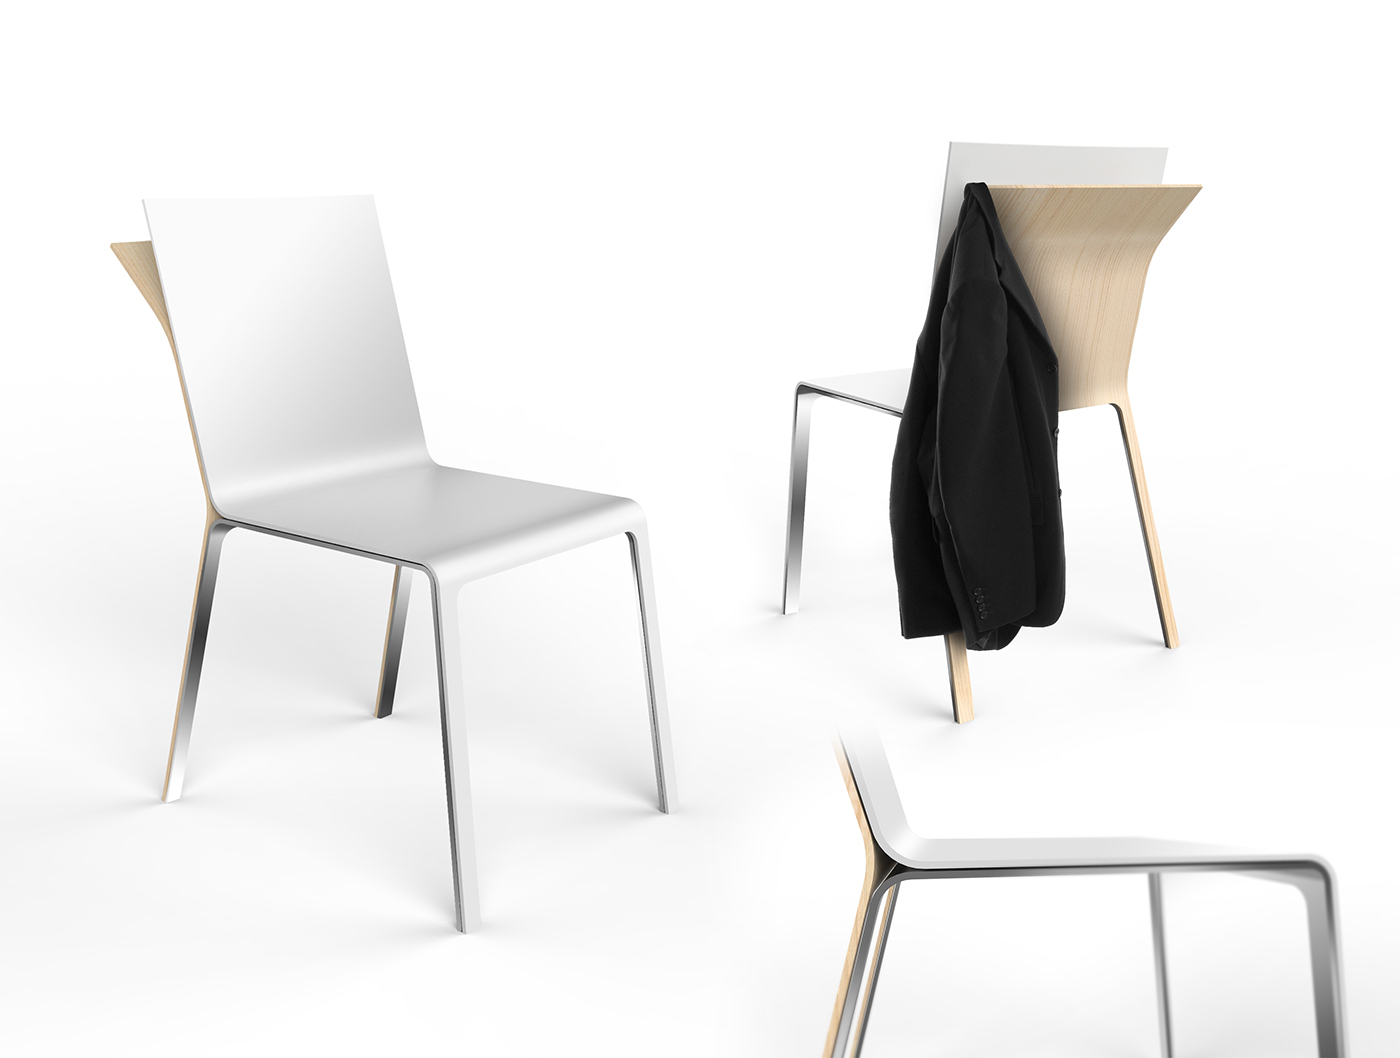 layer chair bent furniture design  designwithastory begum tomruk mirko goetzen storyteller wood metal